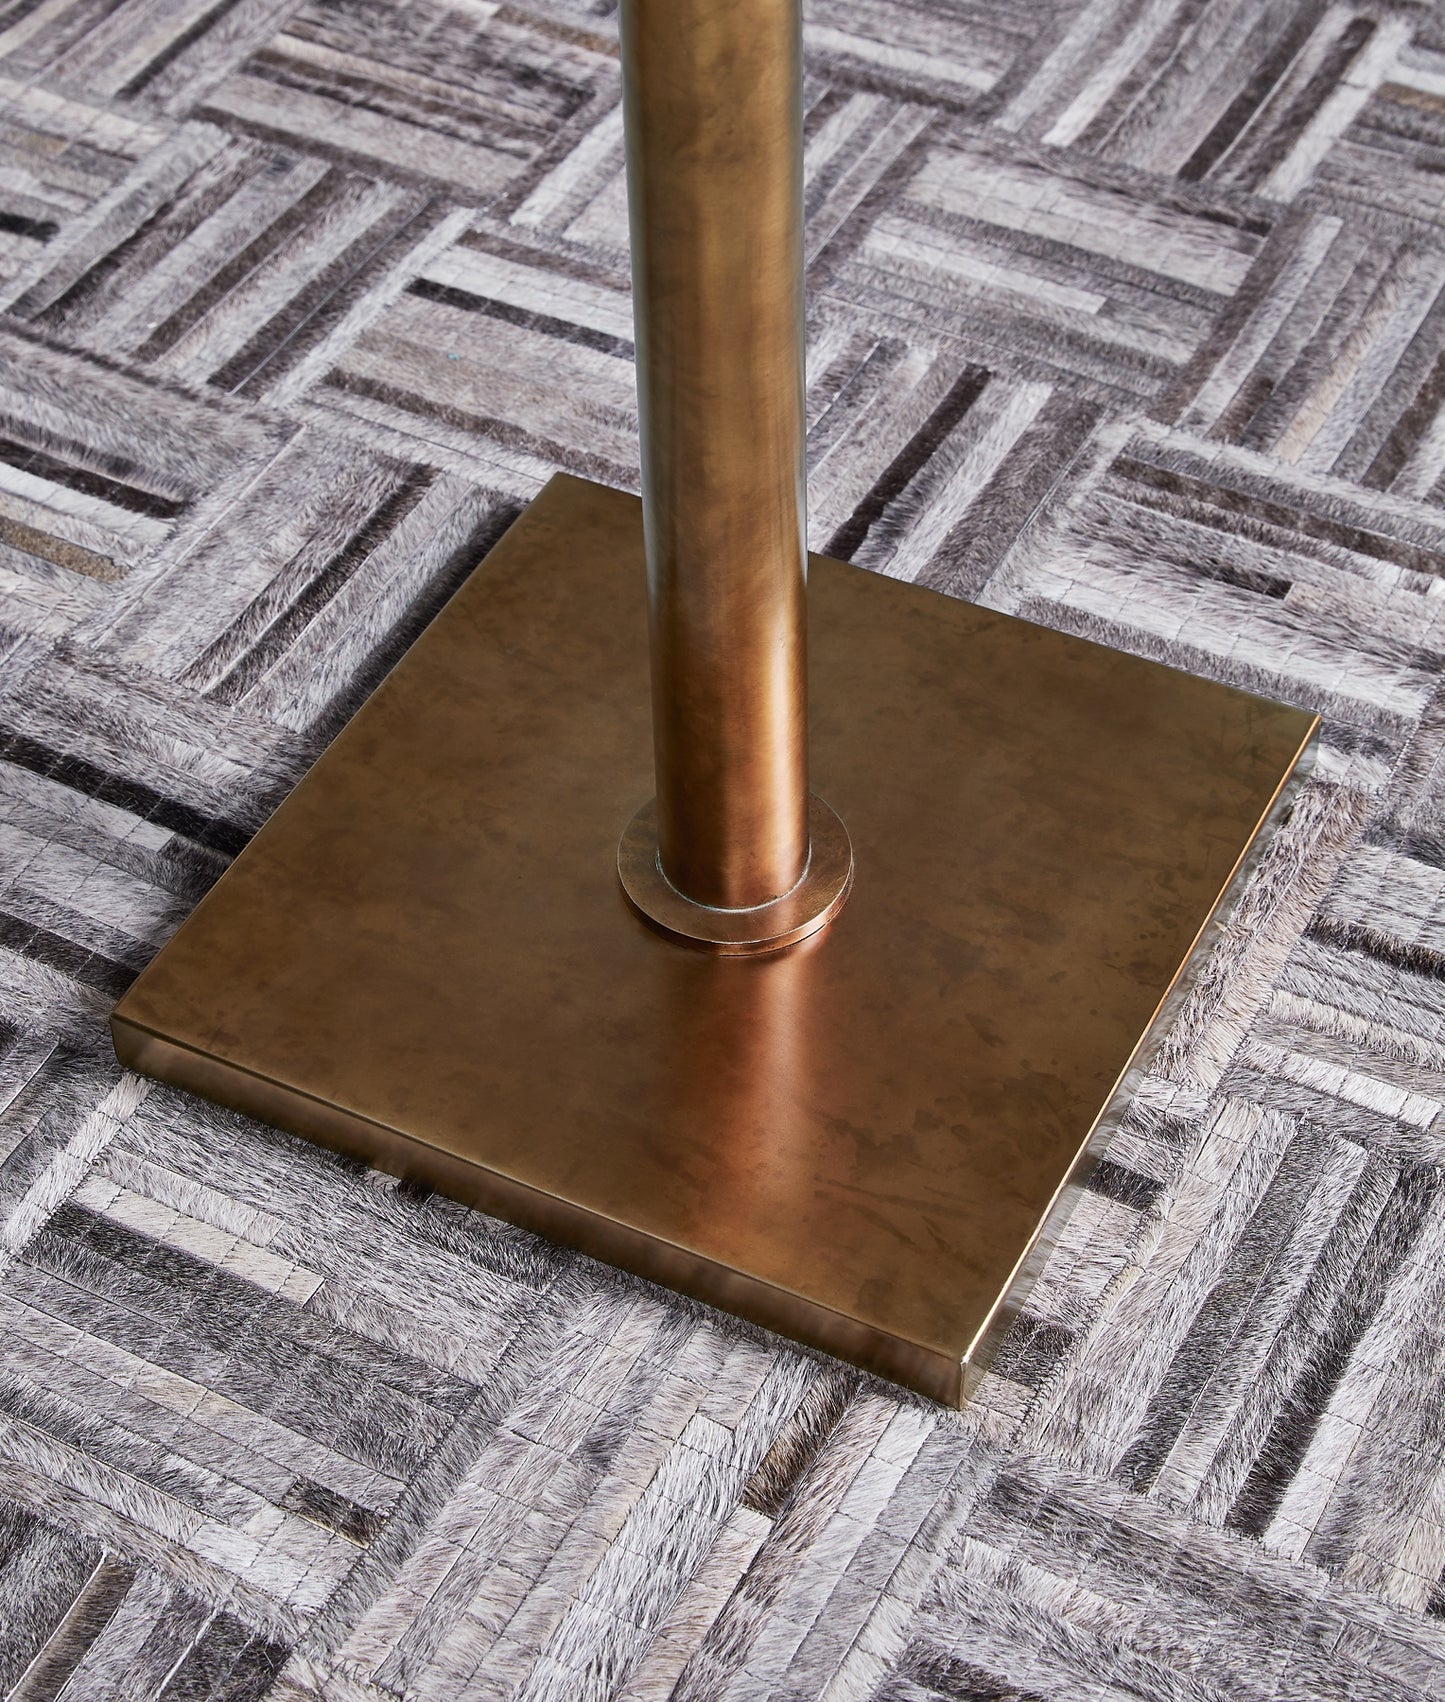 Jenton Metal Floor Lamp (1/CN) Signature Design by Ashley®